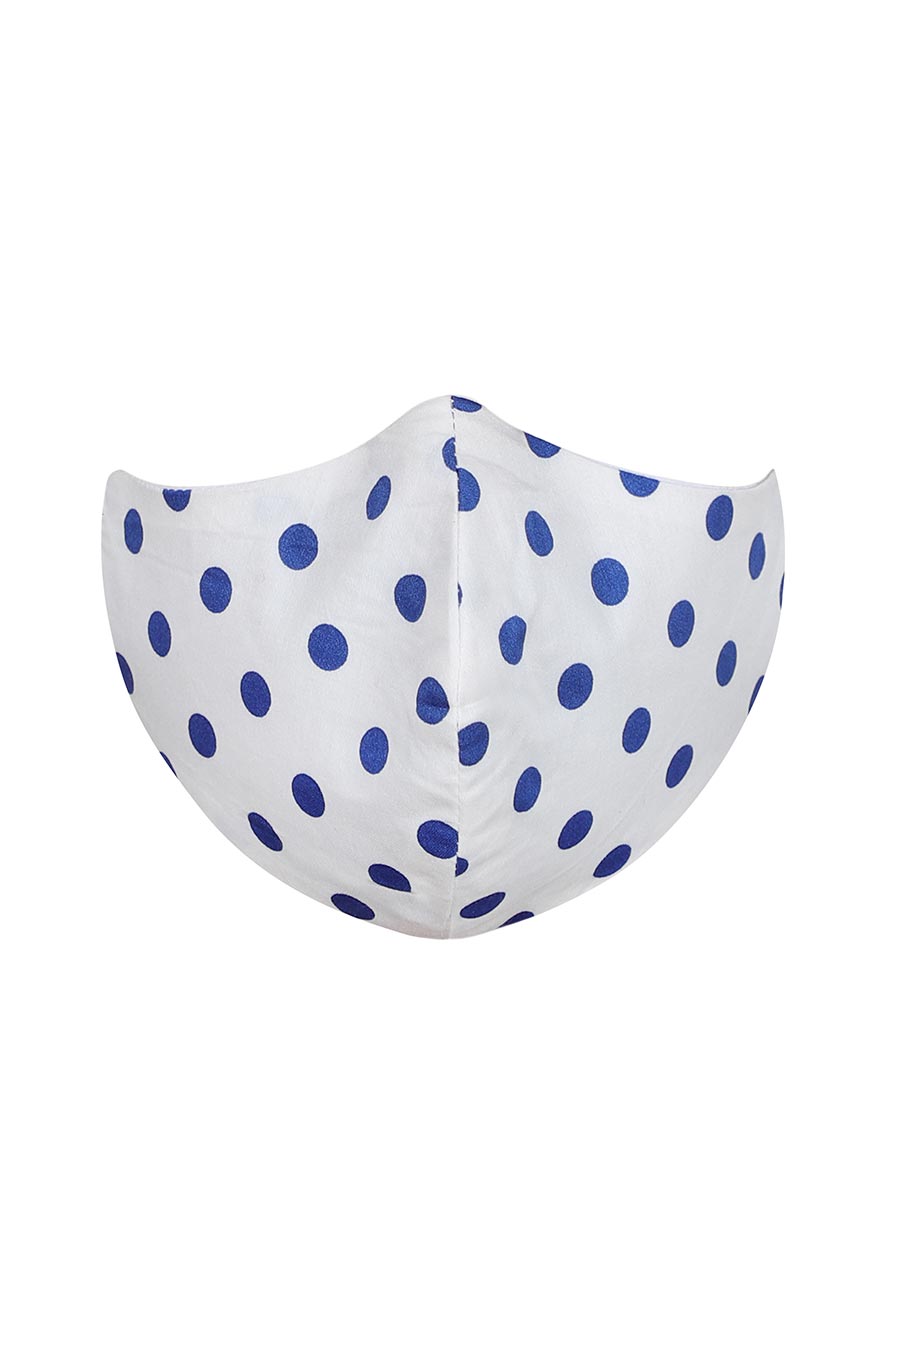 White & Blue Polka Dots 3 Ply Mask